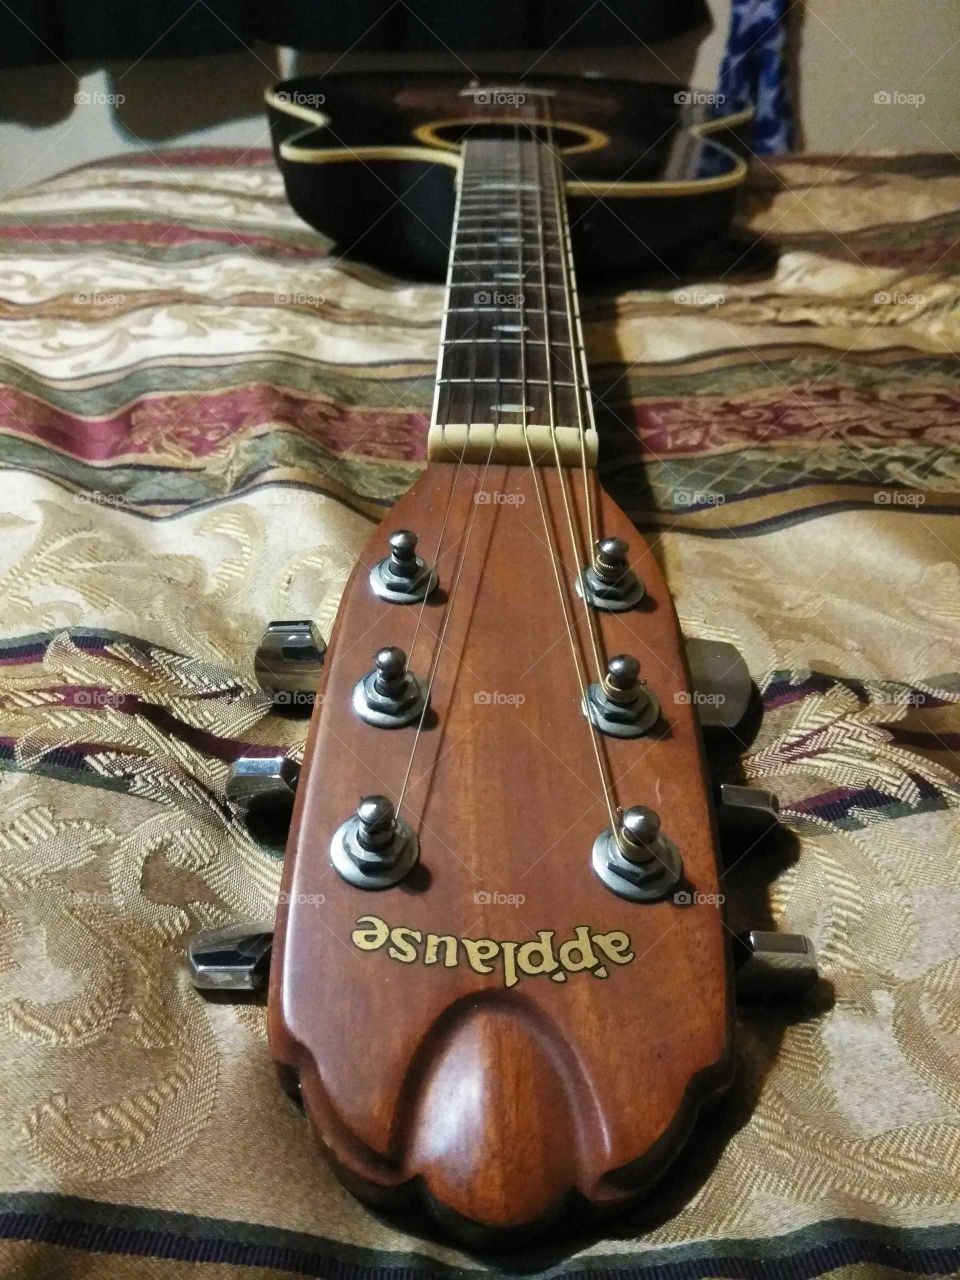 My beautiful guitar